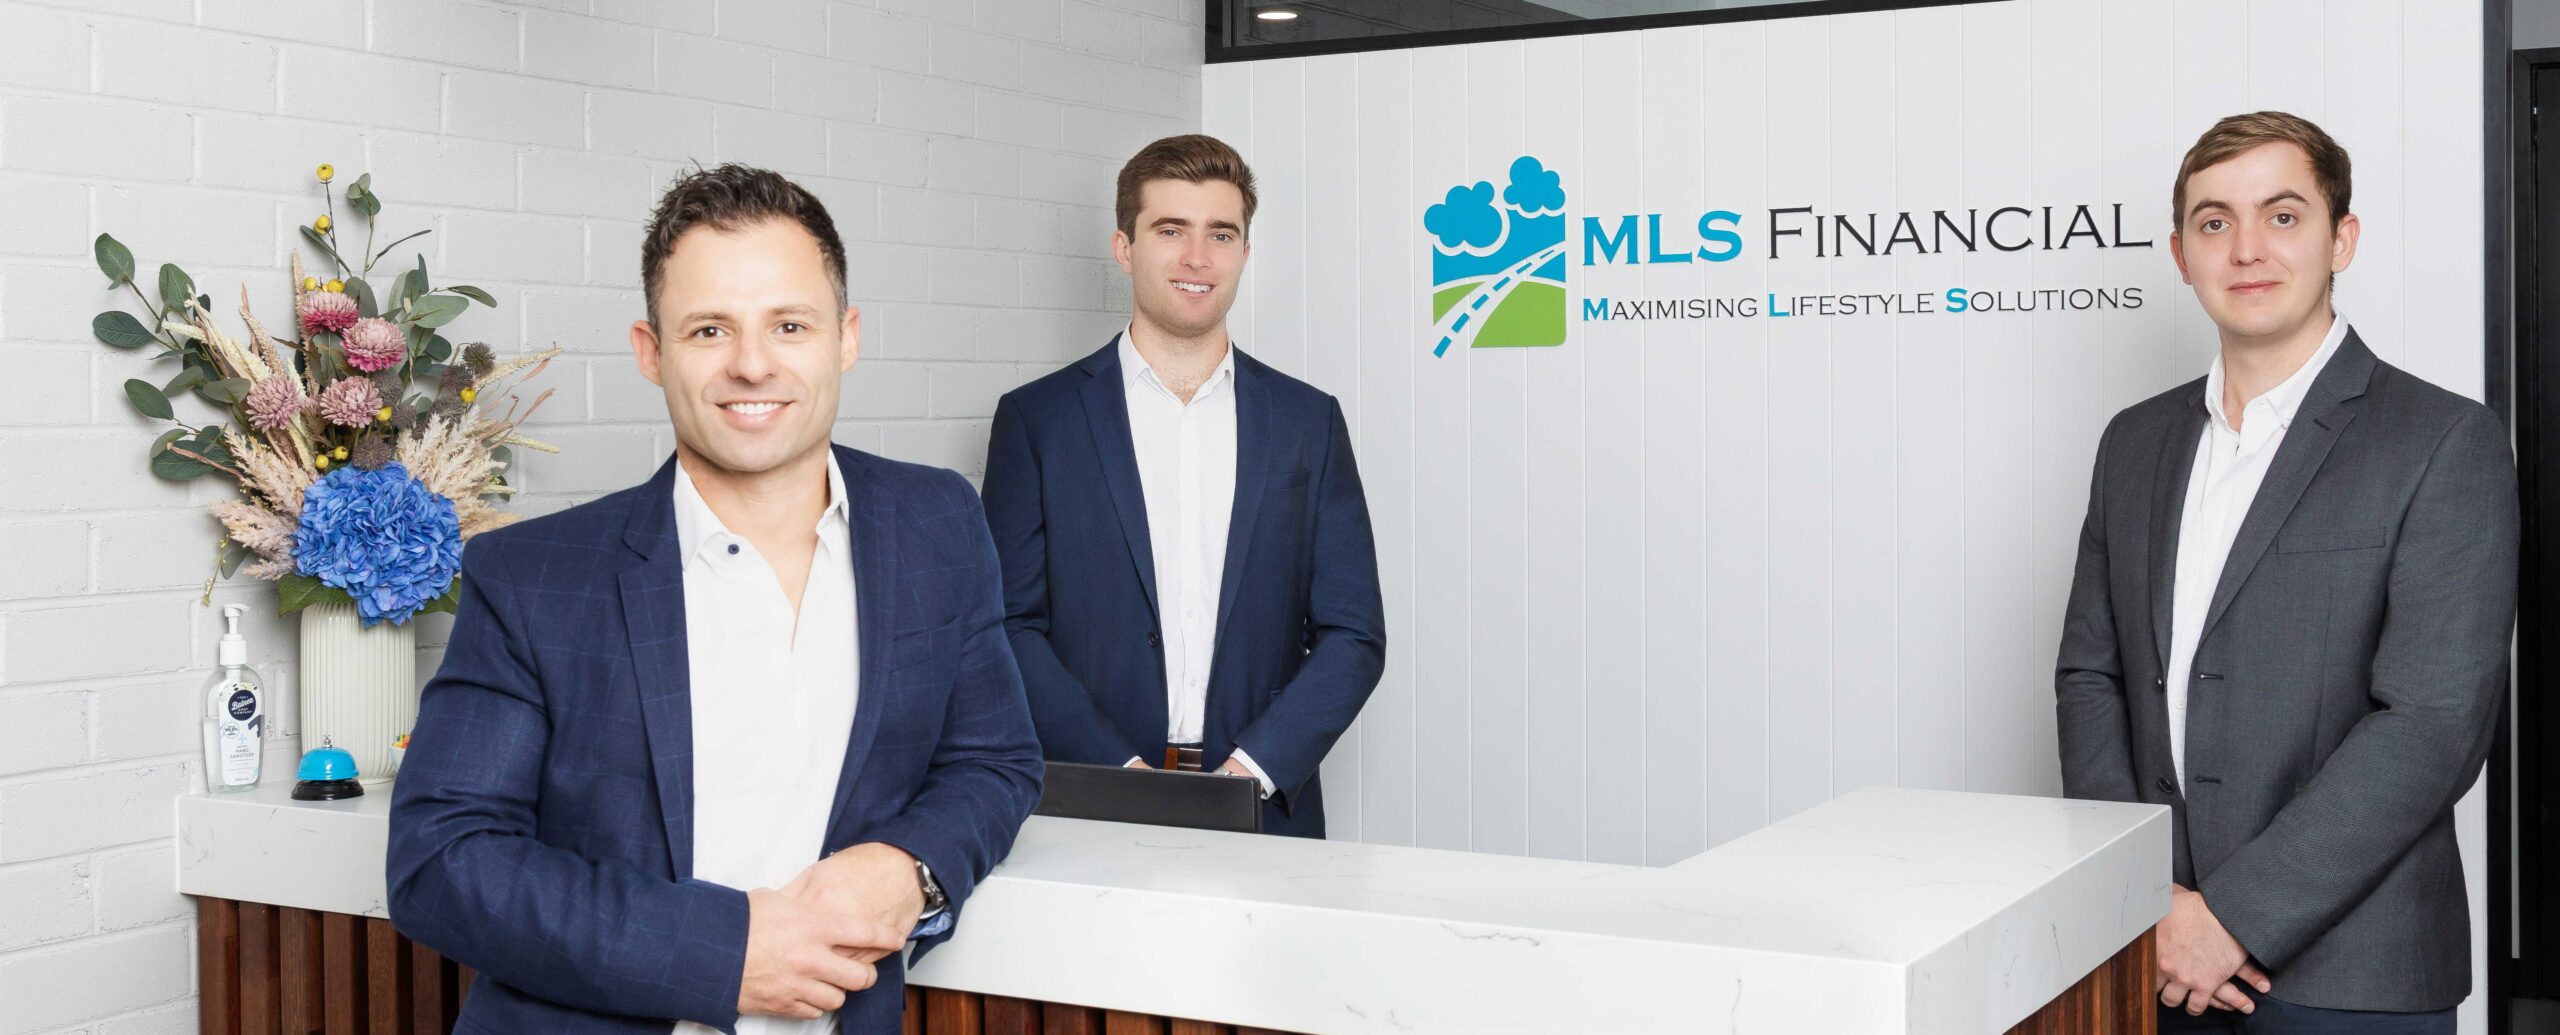 MLS Financial